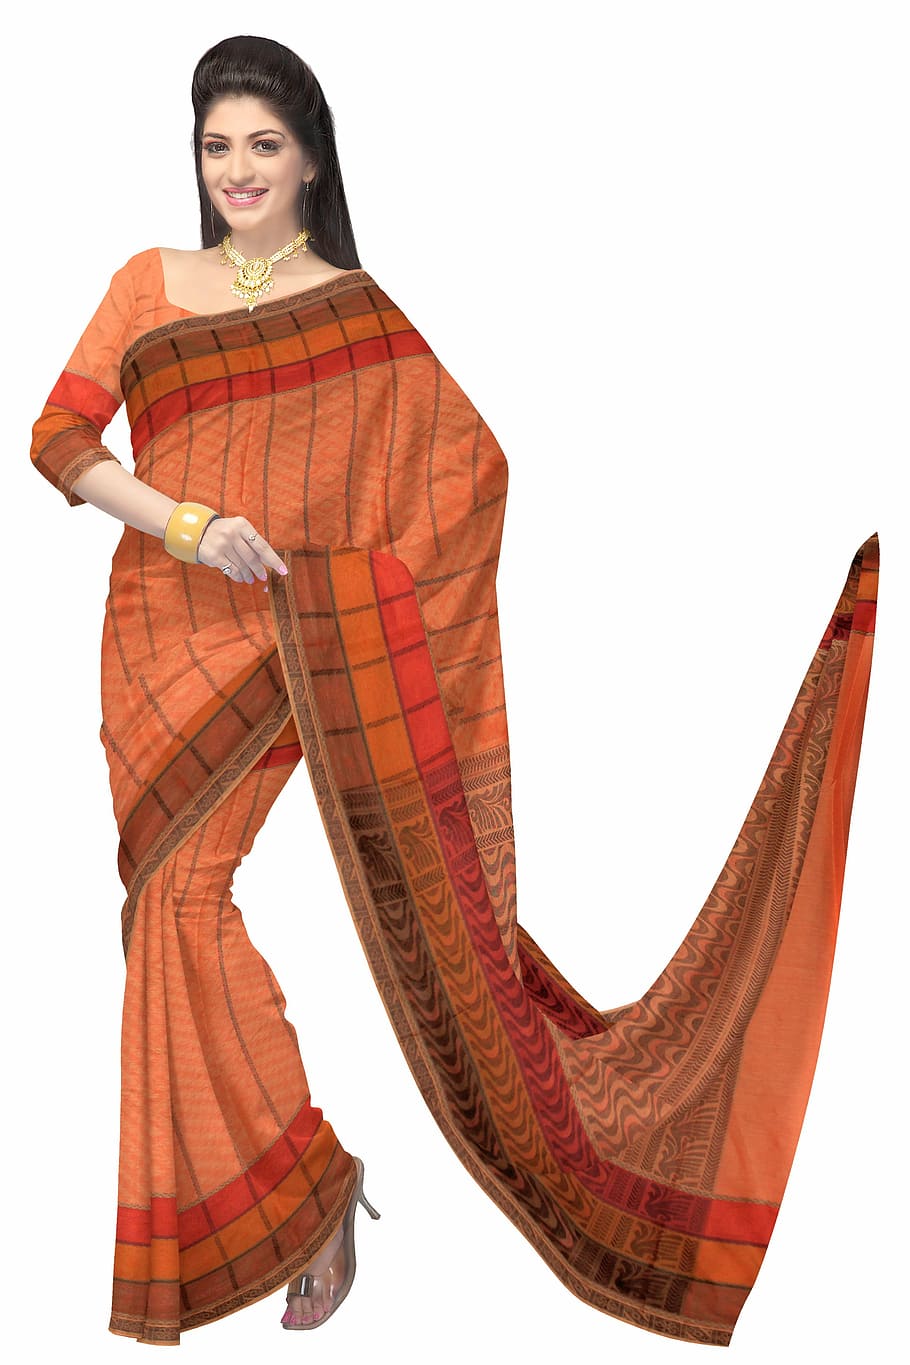 sari, roupas indianas, moda, seda, vestido, mulher, modelo, roupas, indiano, algodão